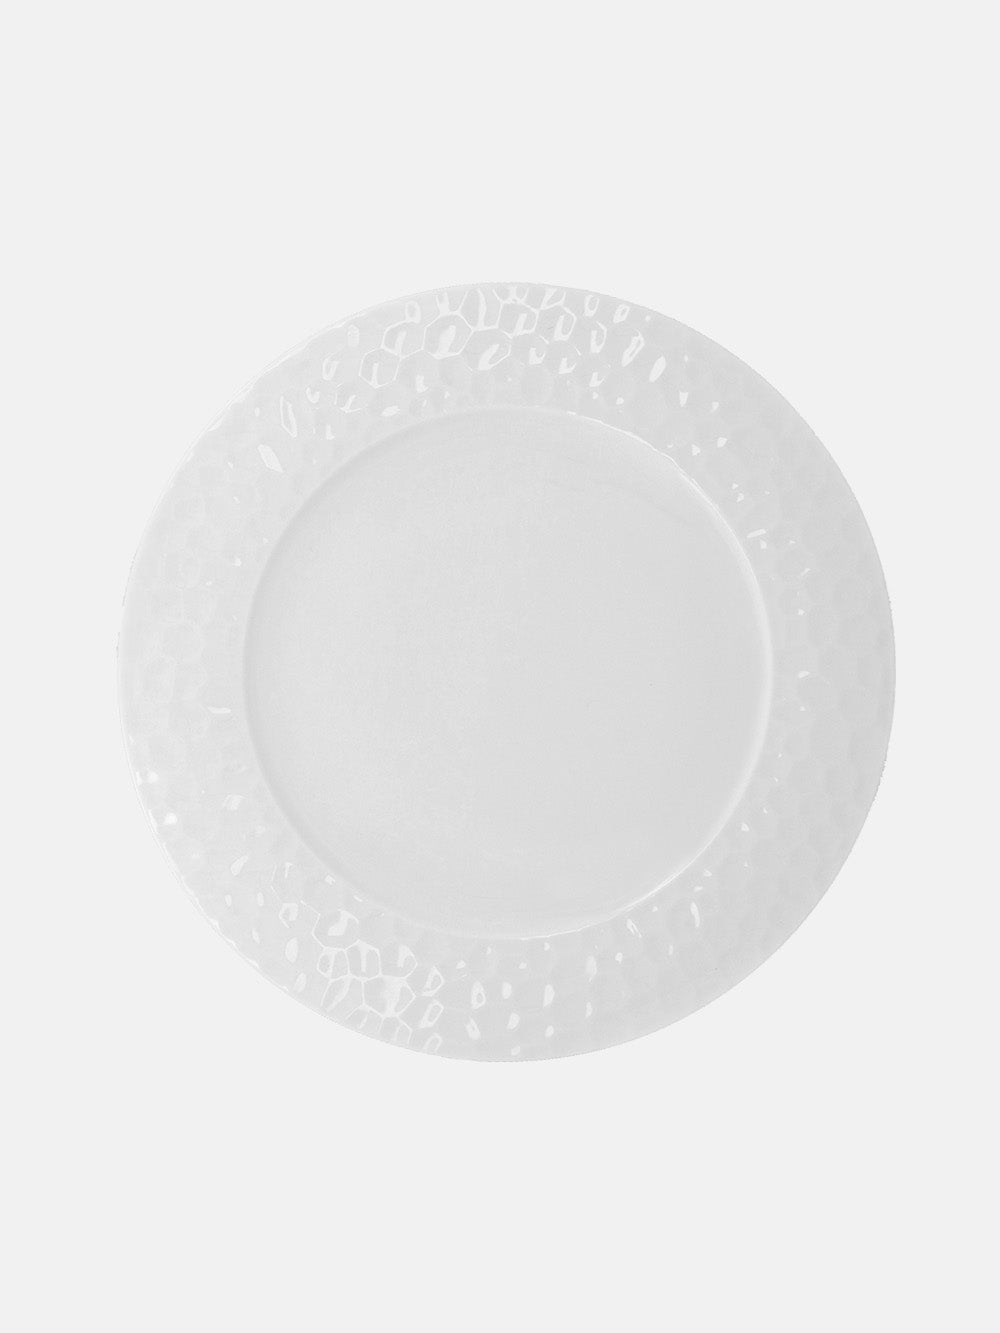 Bubbels porcelain dinner plate